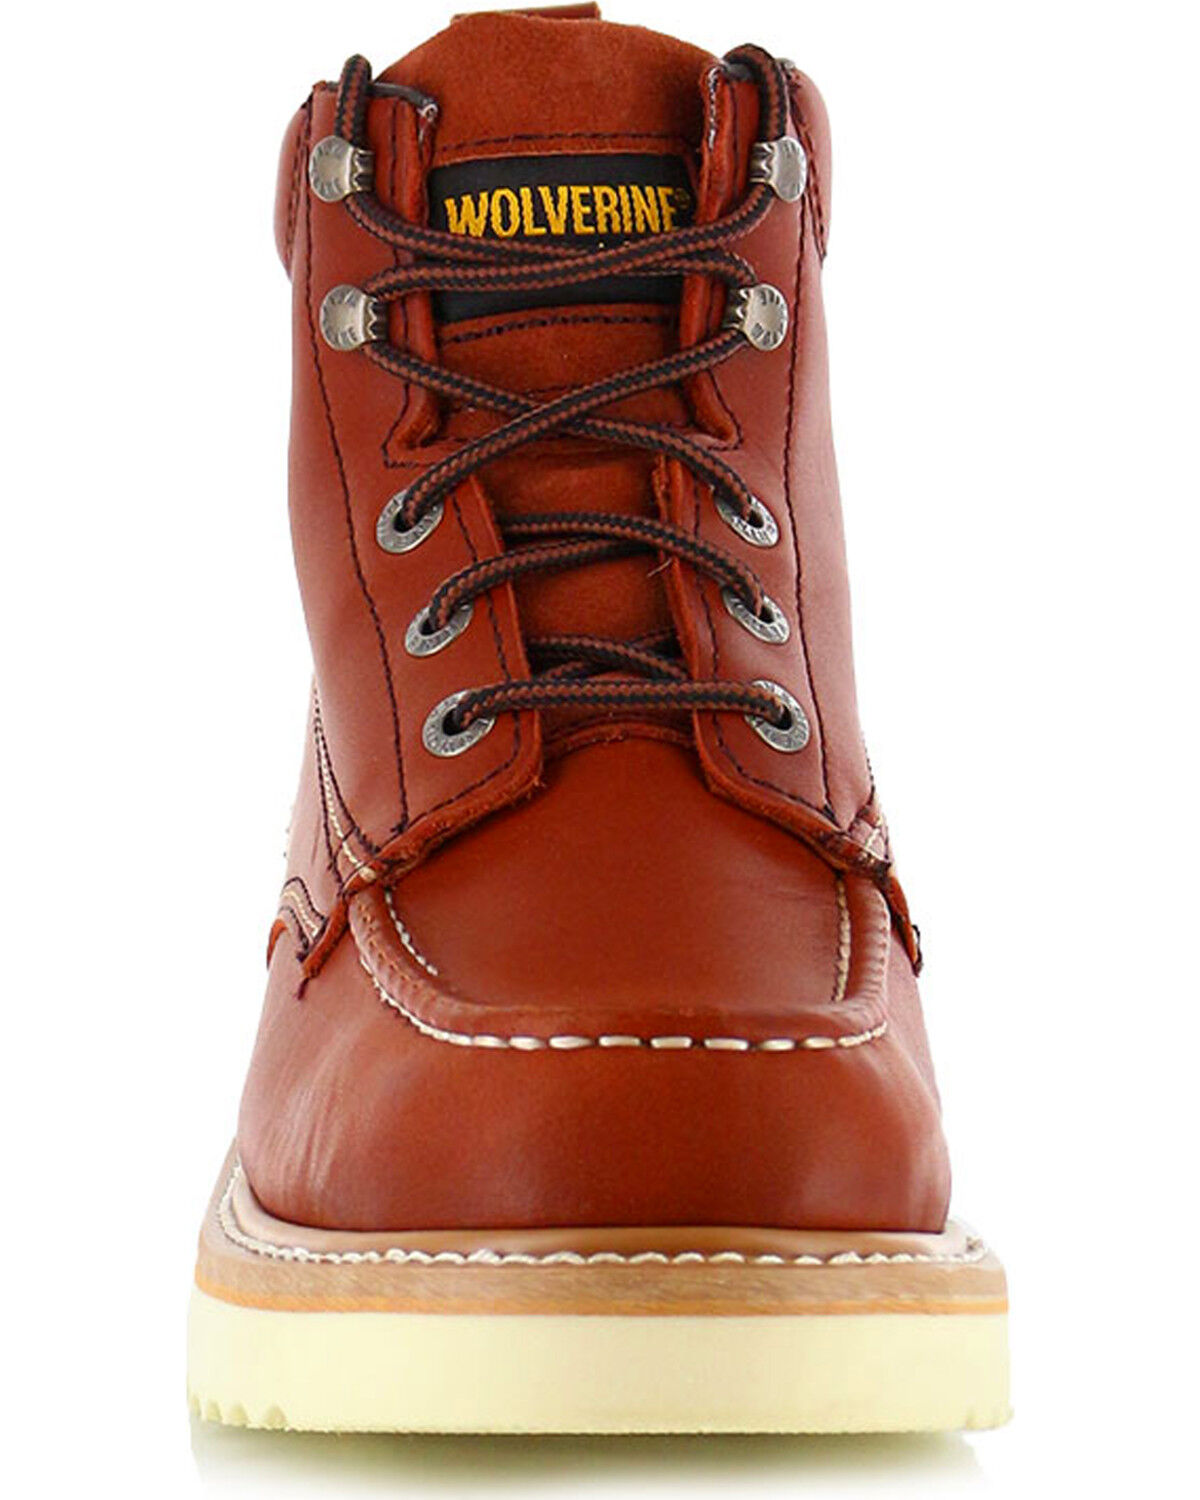 wolverine black moc toe boots